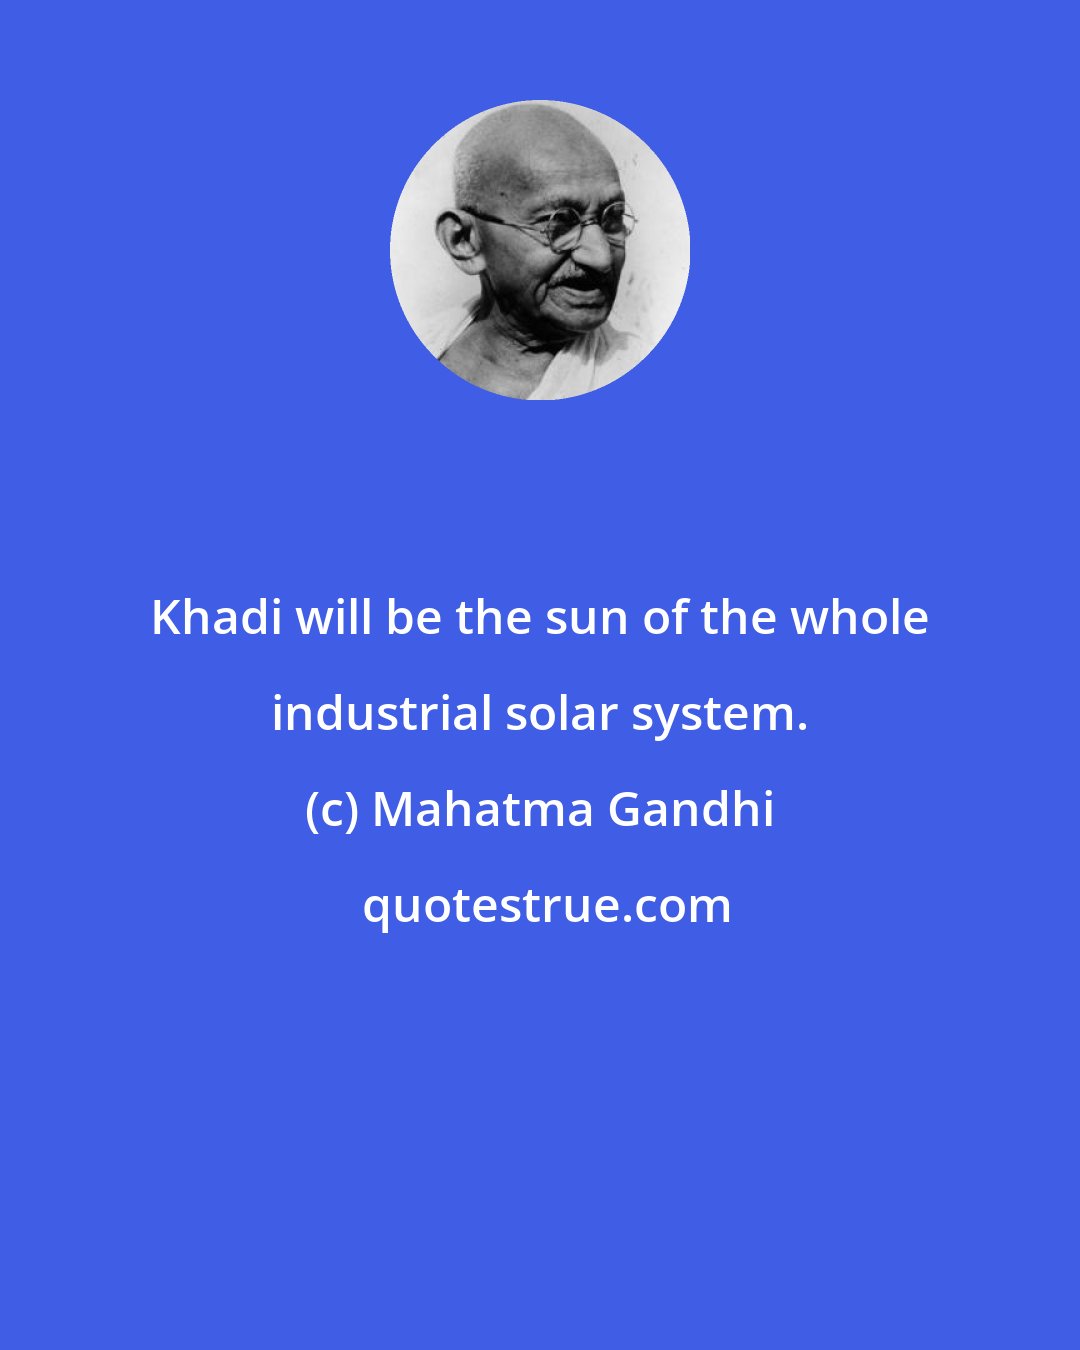 Mahatma Gandhi: Khadi will be the sun of the whole industrial solar system.